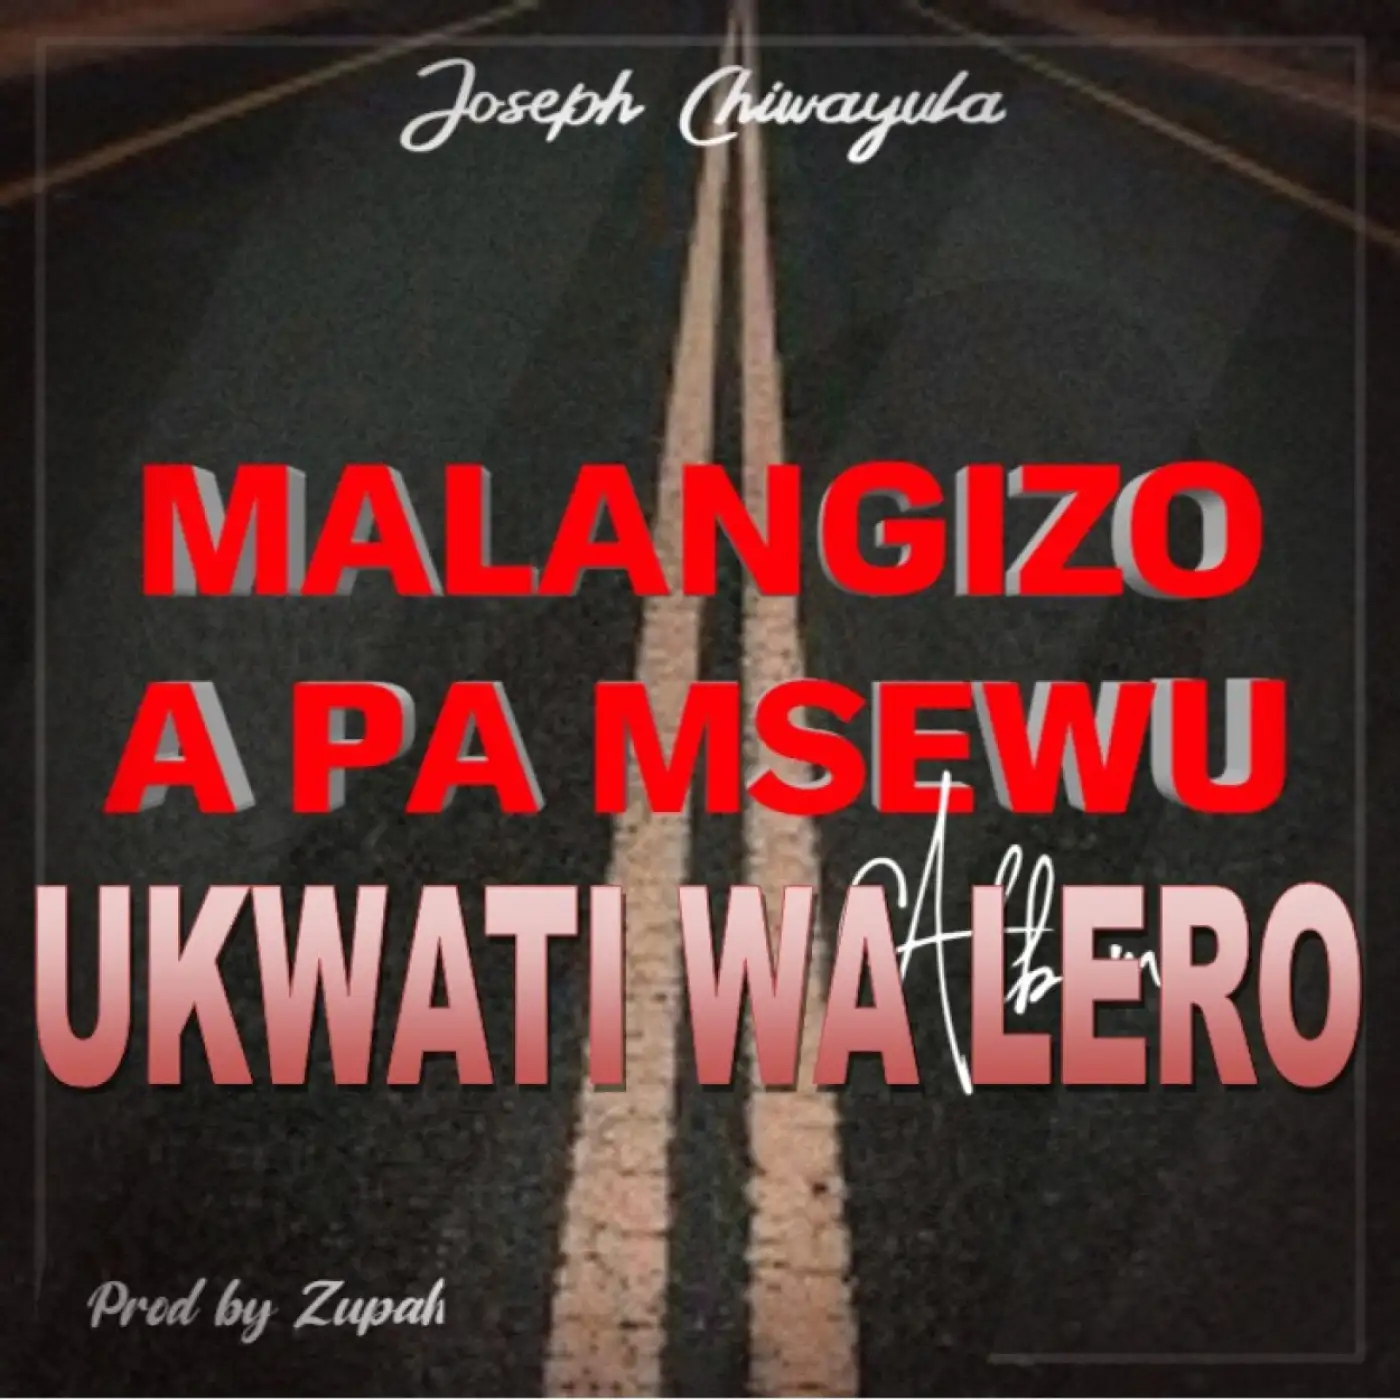 joseph-chiwayula-ukwati-wa-lero-mp3-download-mp3 download